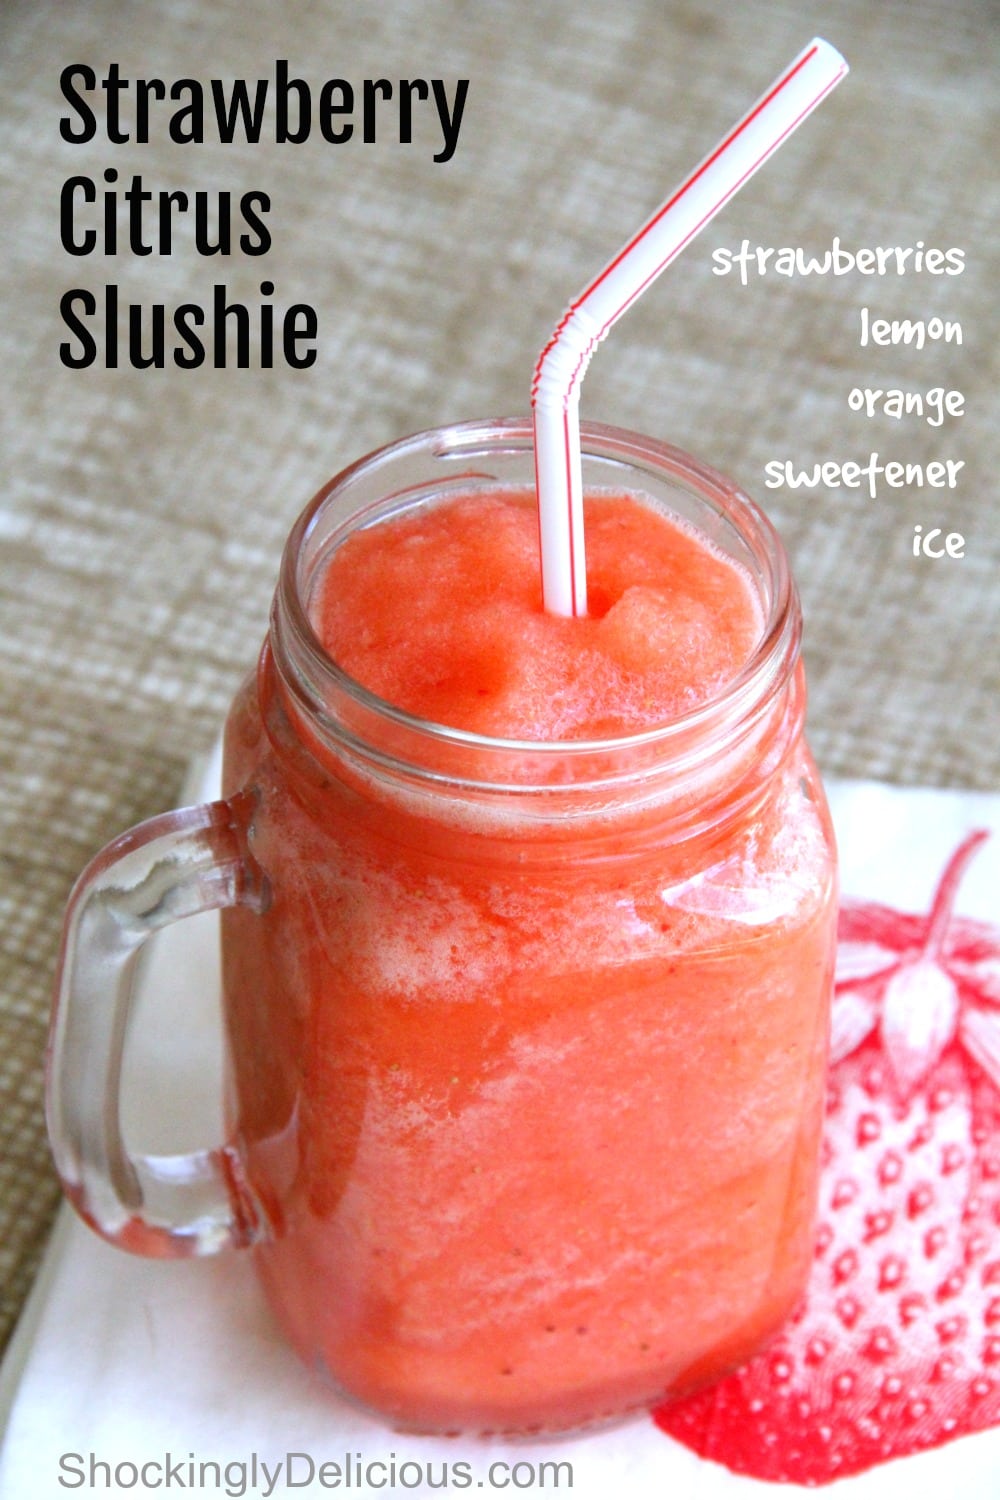 Strawberry Citrus Slushie in a glass mug with striped straw on ShockinglyDelicious.com